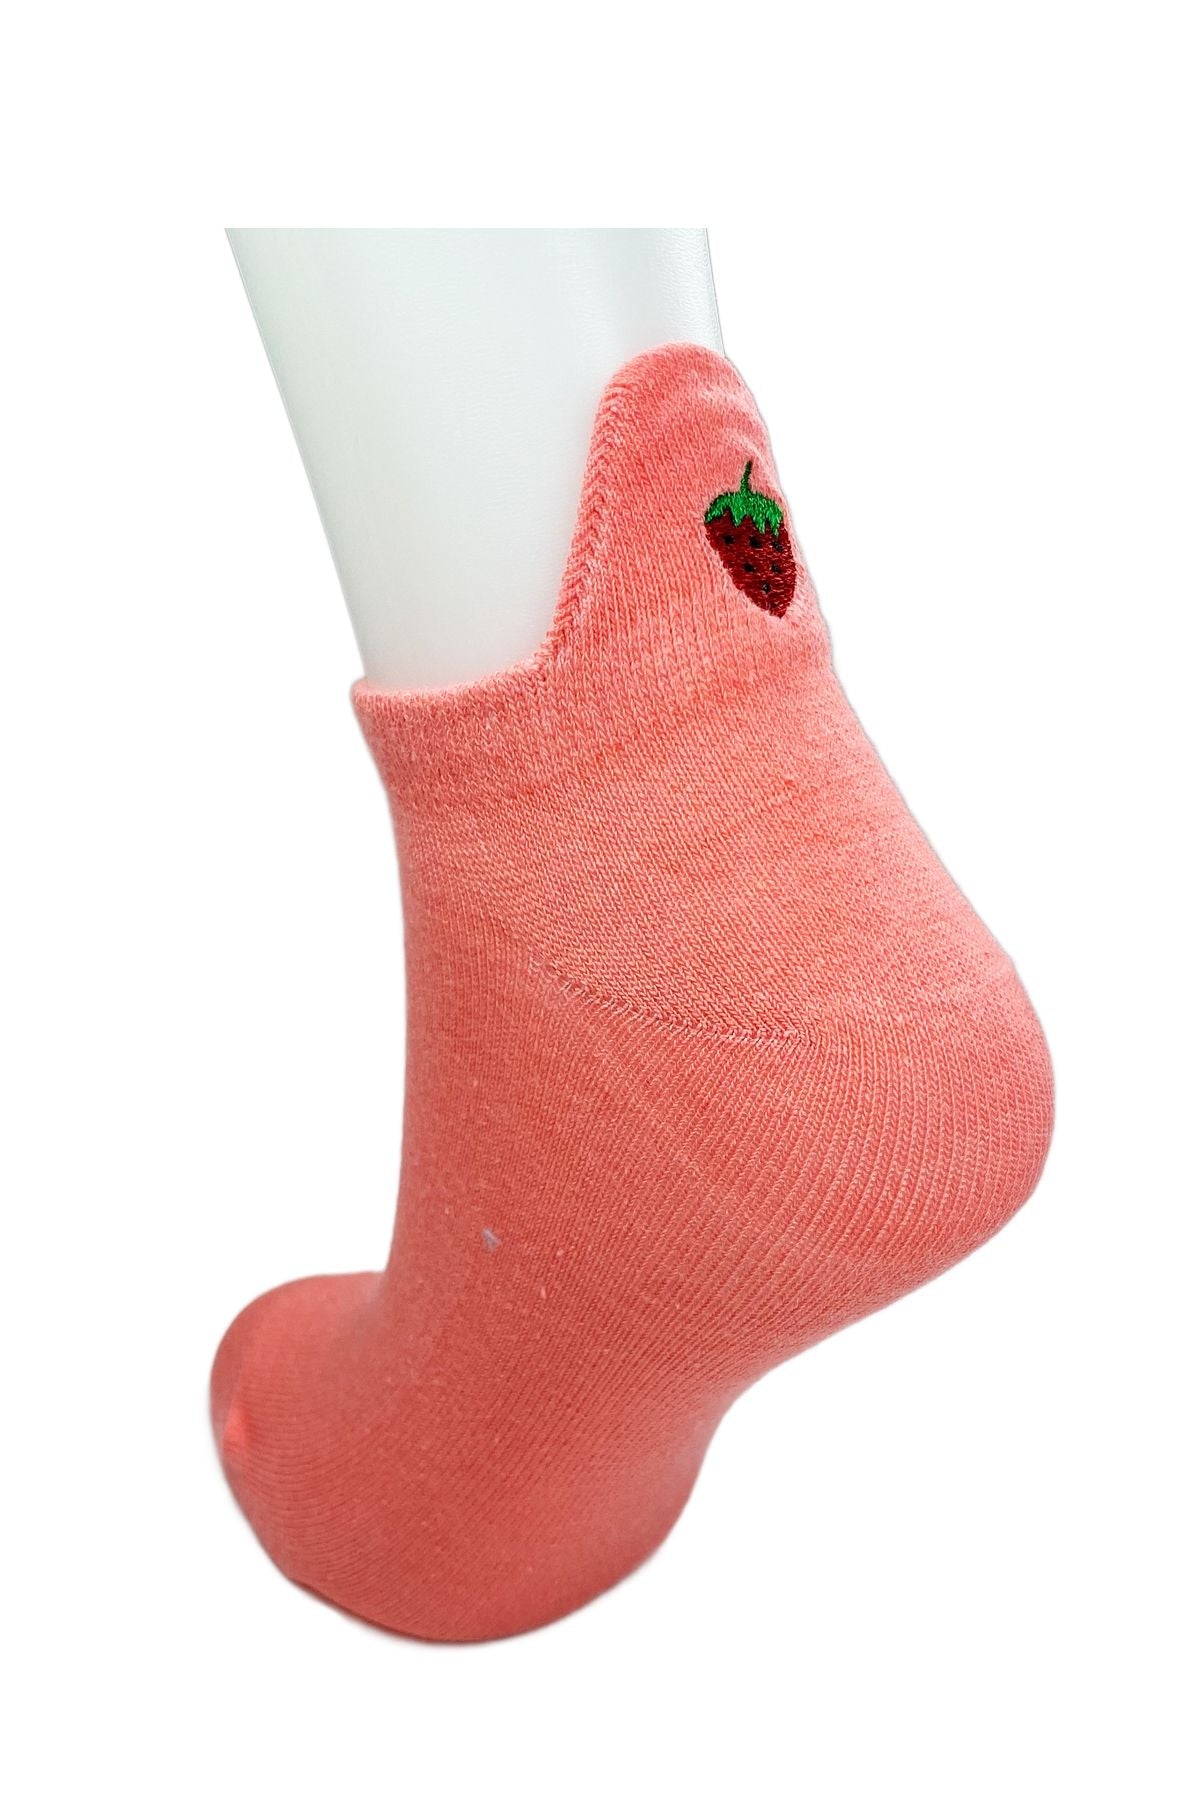 6 Pairs Strawberry Embroidery Printed Cotton Soft Women Wrist Socks